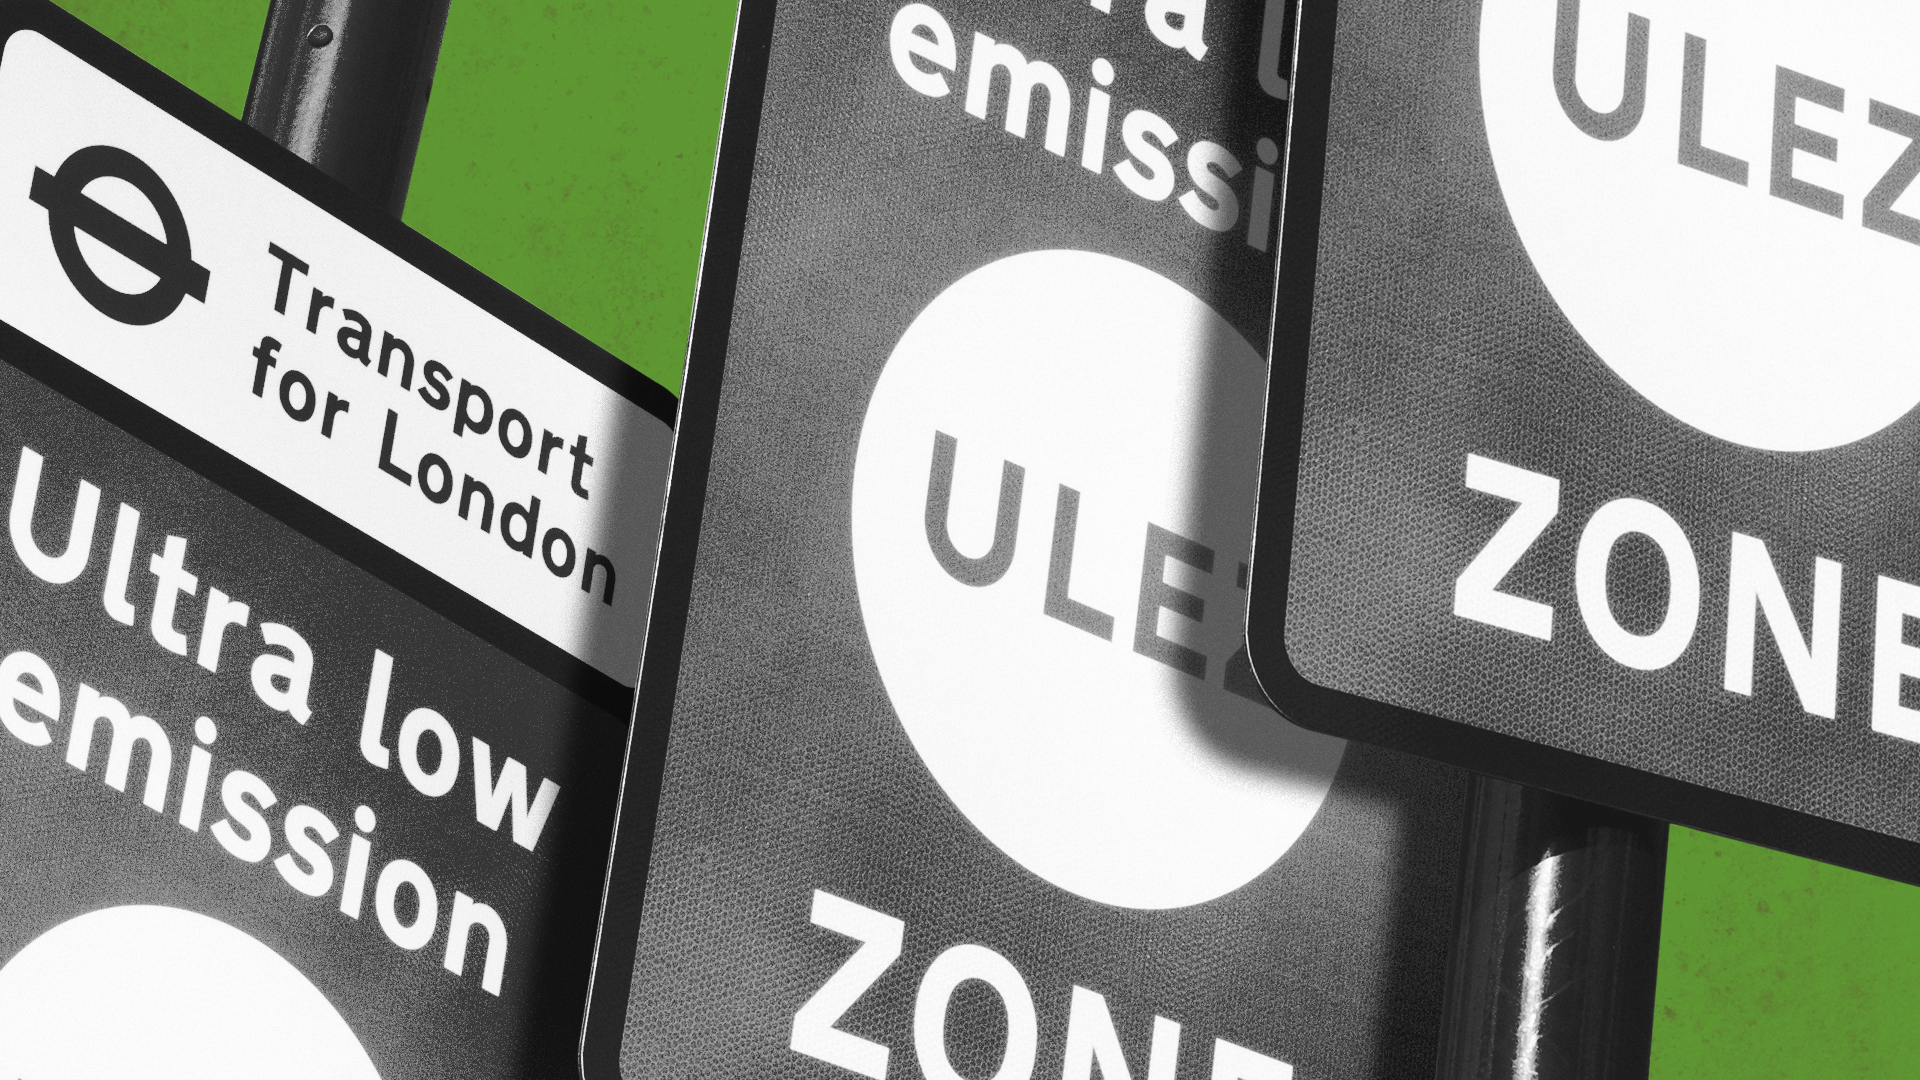 Ultra low emission zone label